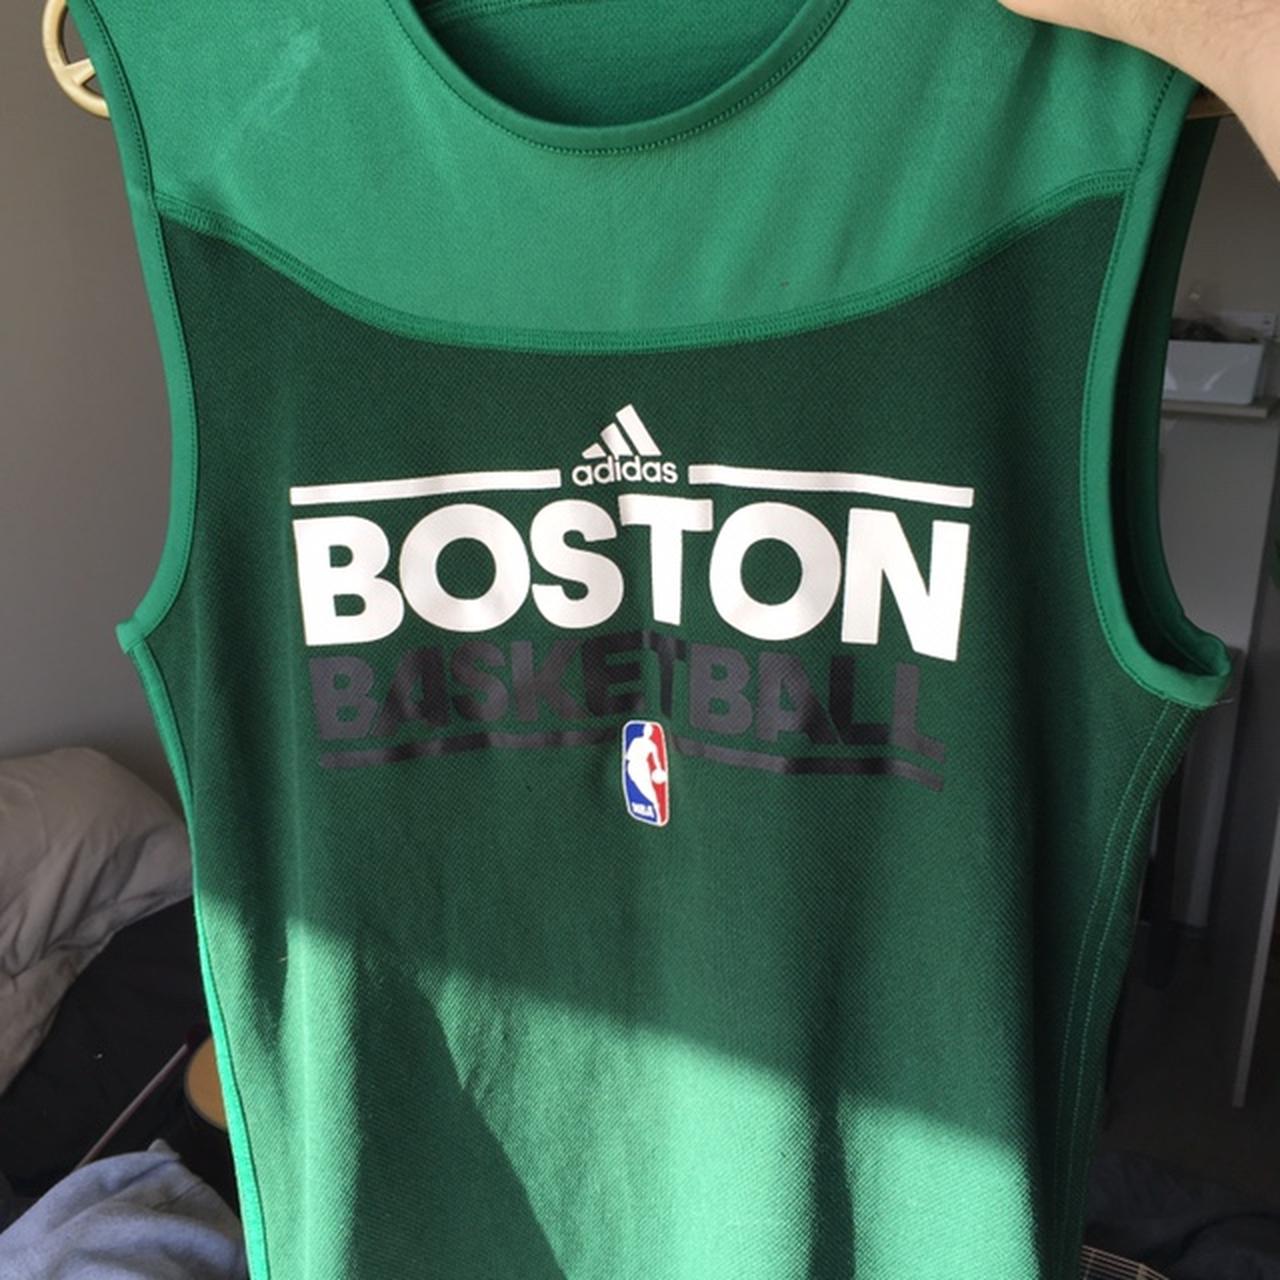 Authentic Boston Celtics NBA reversible training